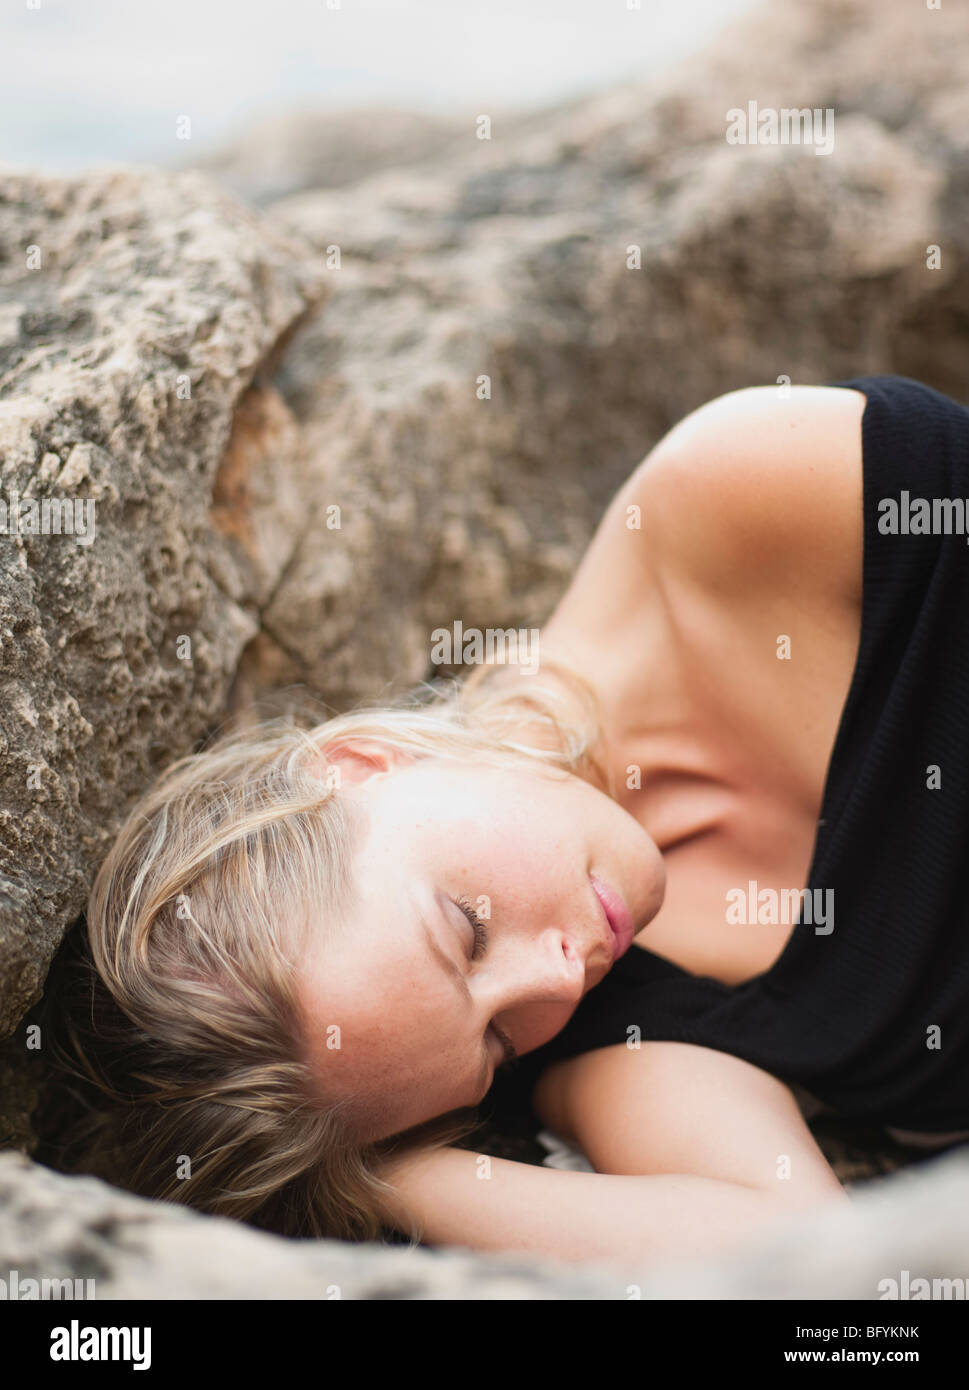 woman lying on rocks at cliffs Stock Photo